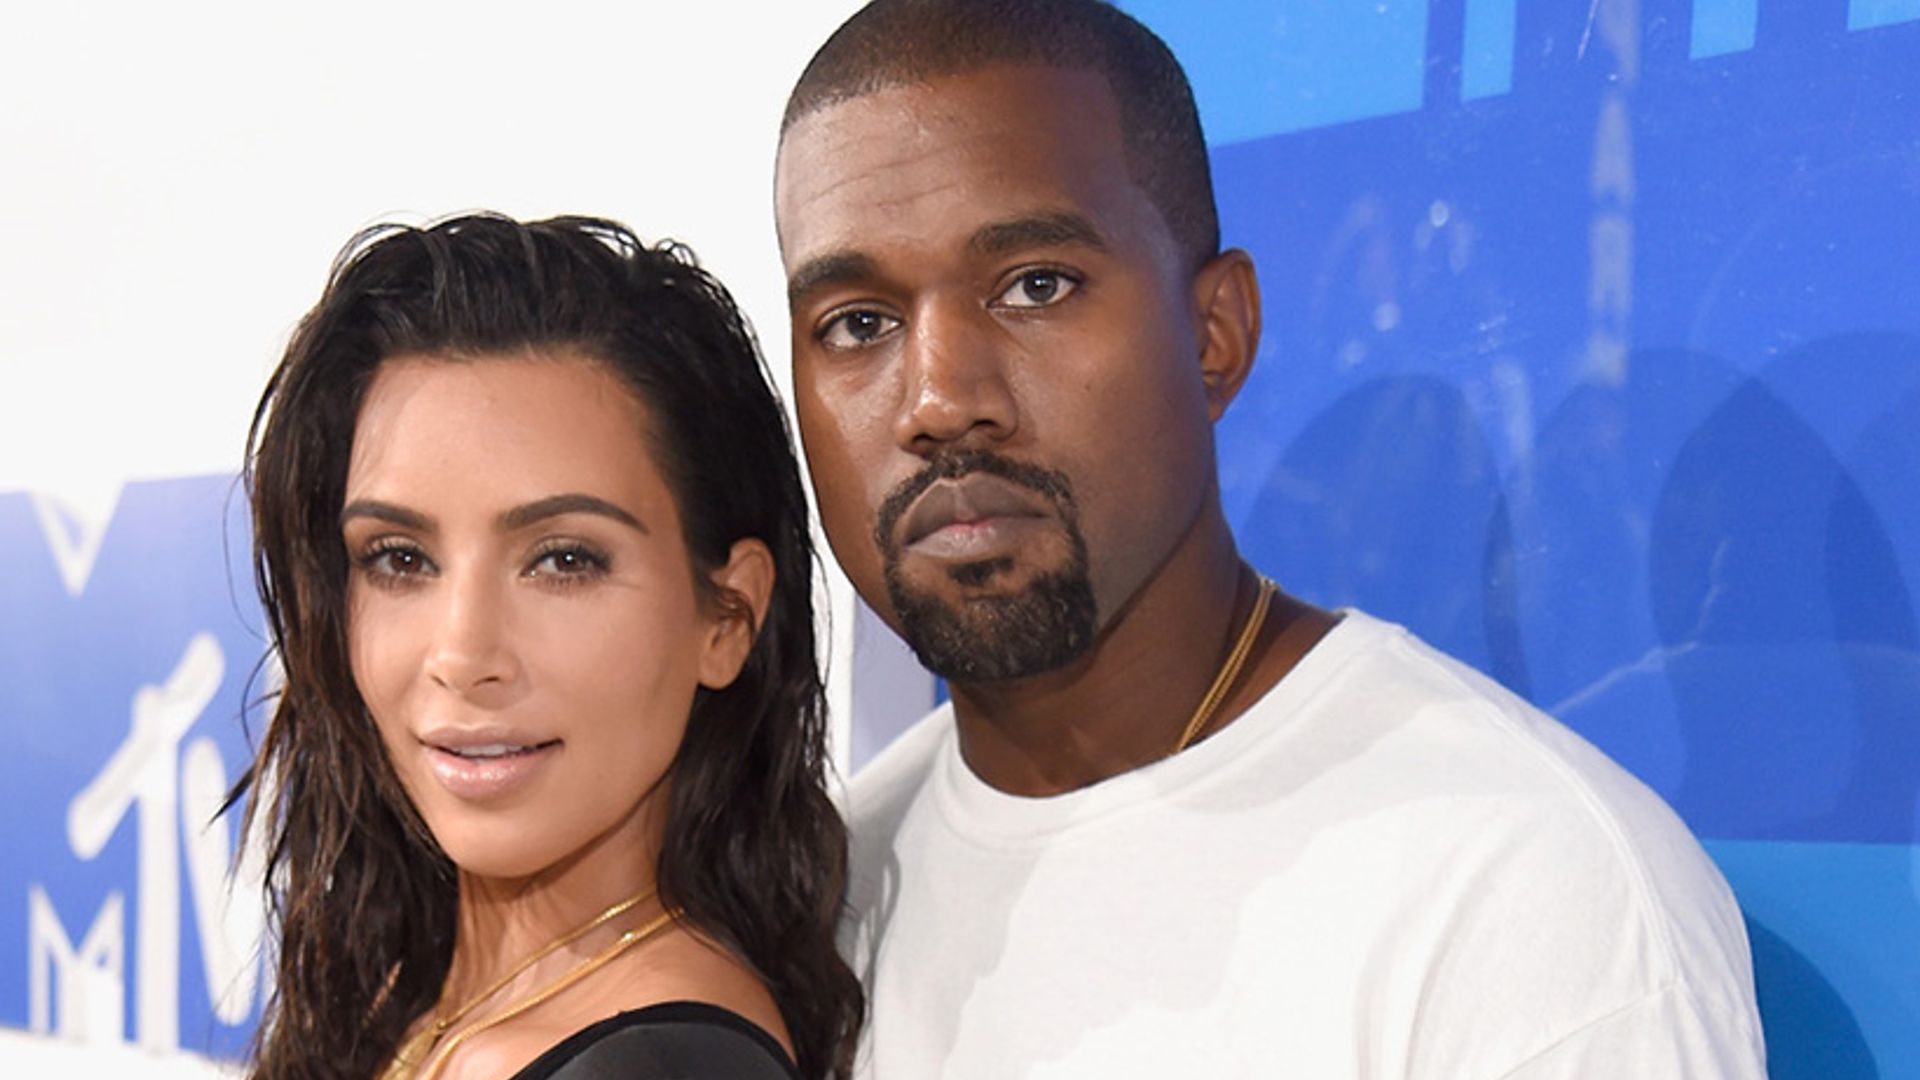 Kim Kardashian and Kanye West celebrate 3-year wedding anniversary with never-before-seen wedding photos